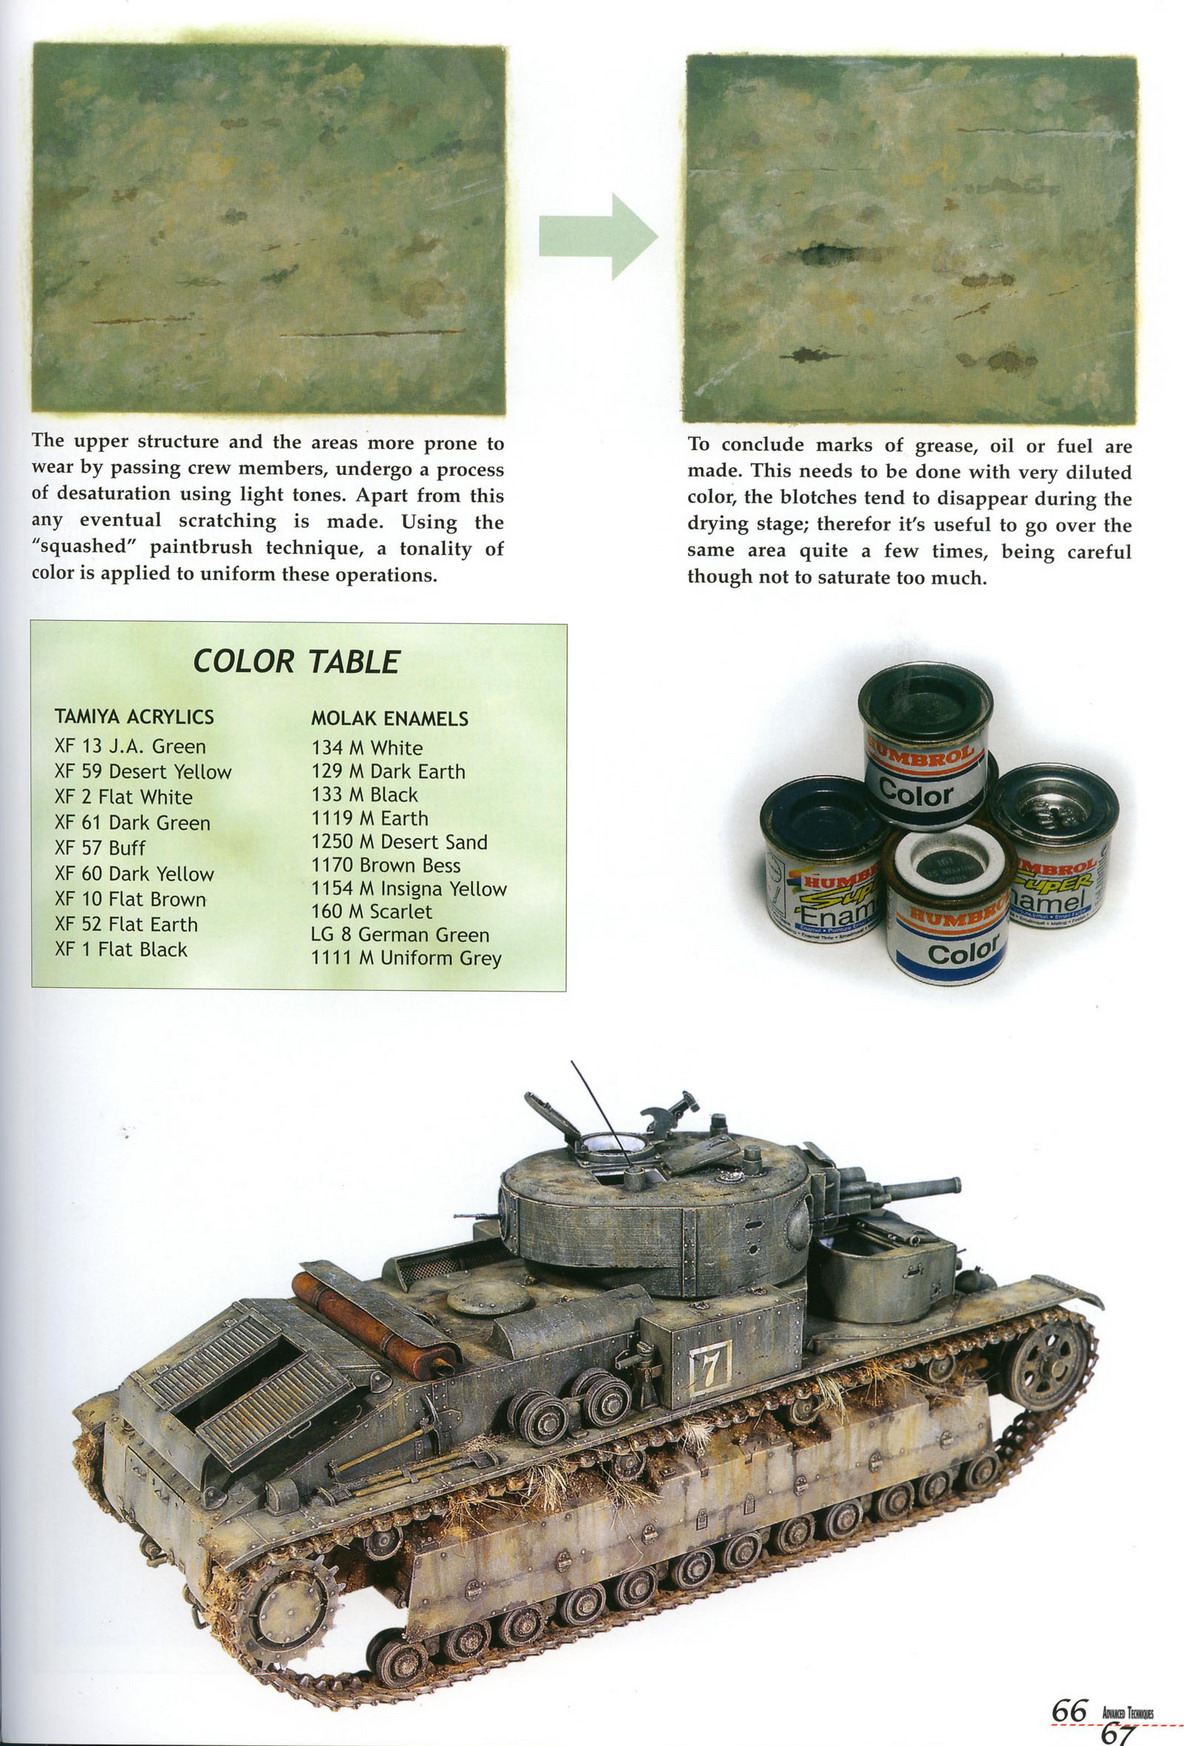 Painting & Weathering Military Vehicles (66).JPG